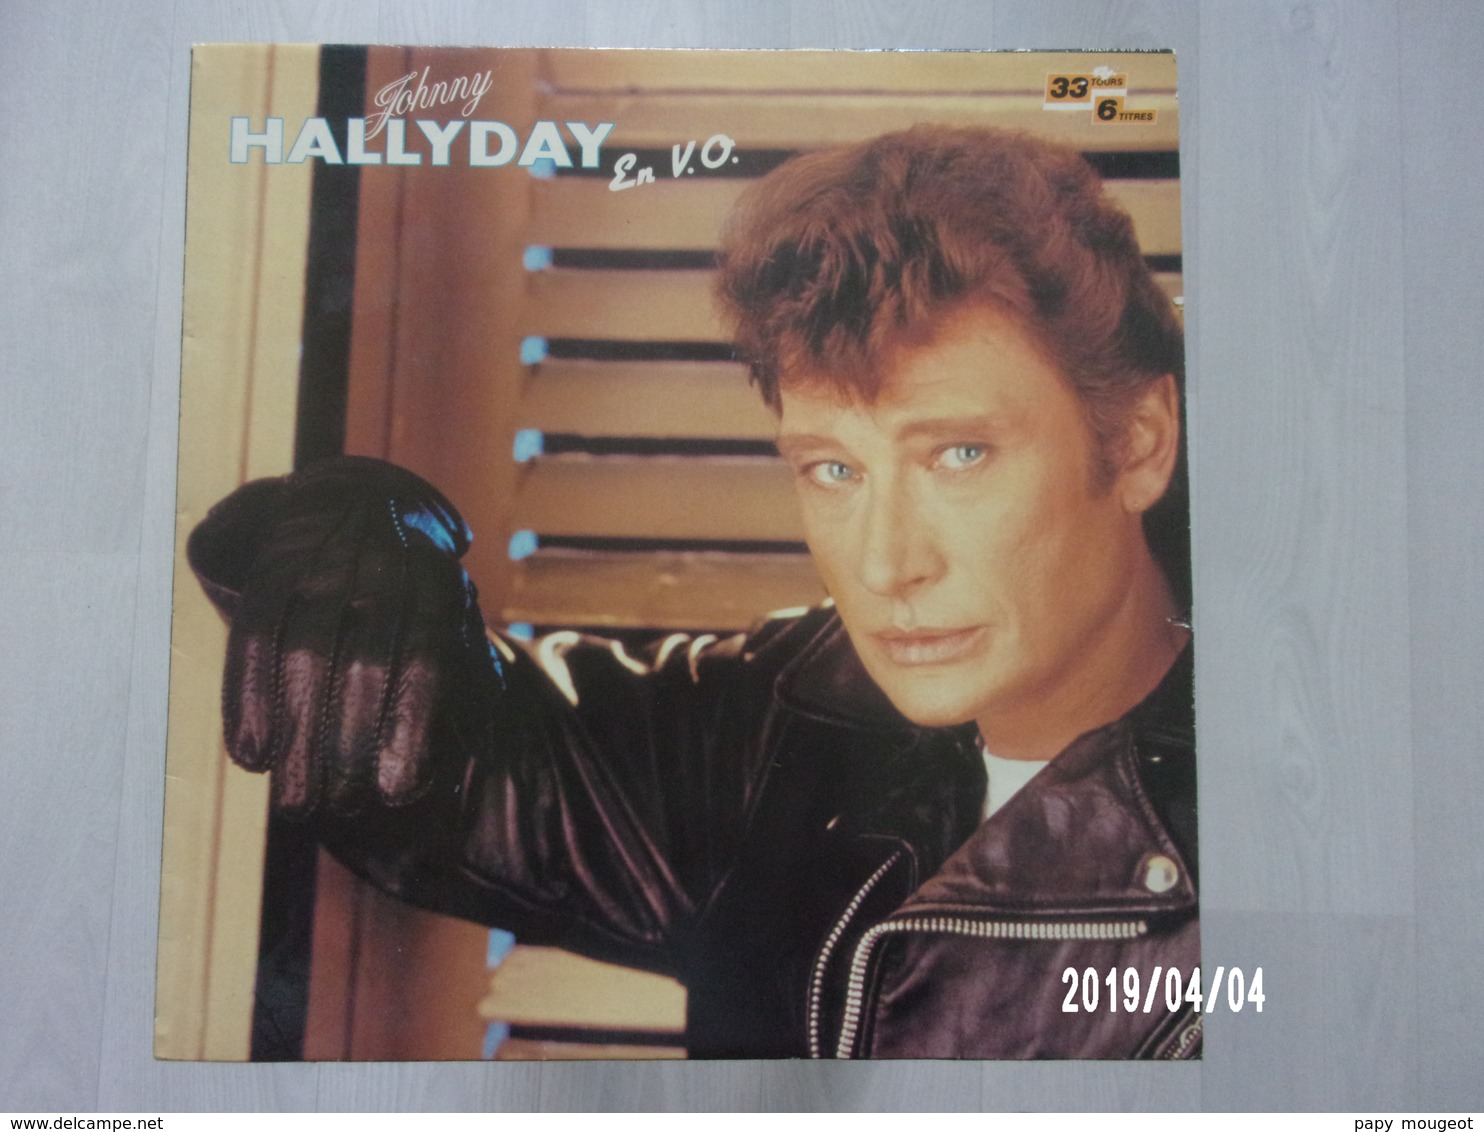 Johnny Hallyday - En V.O - 1983 - Rock